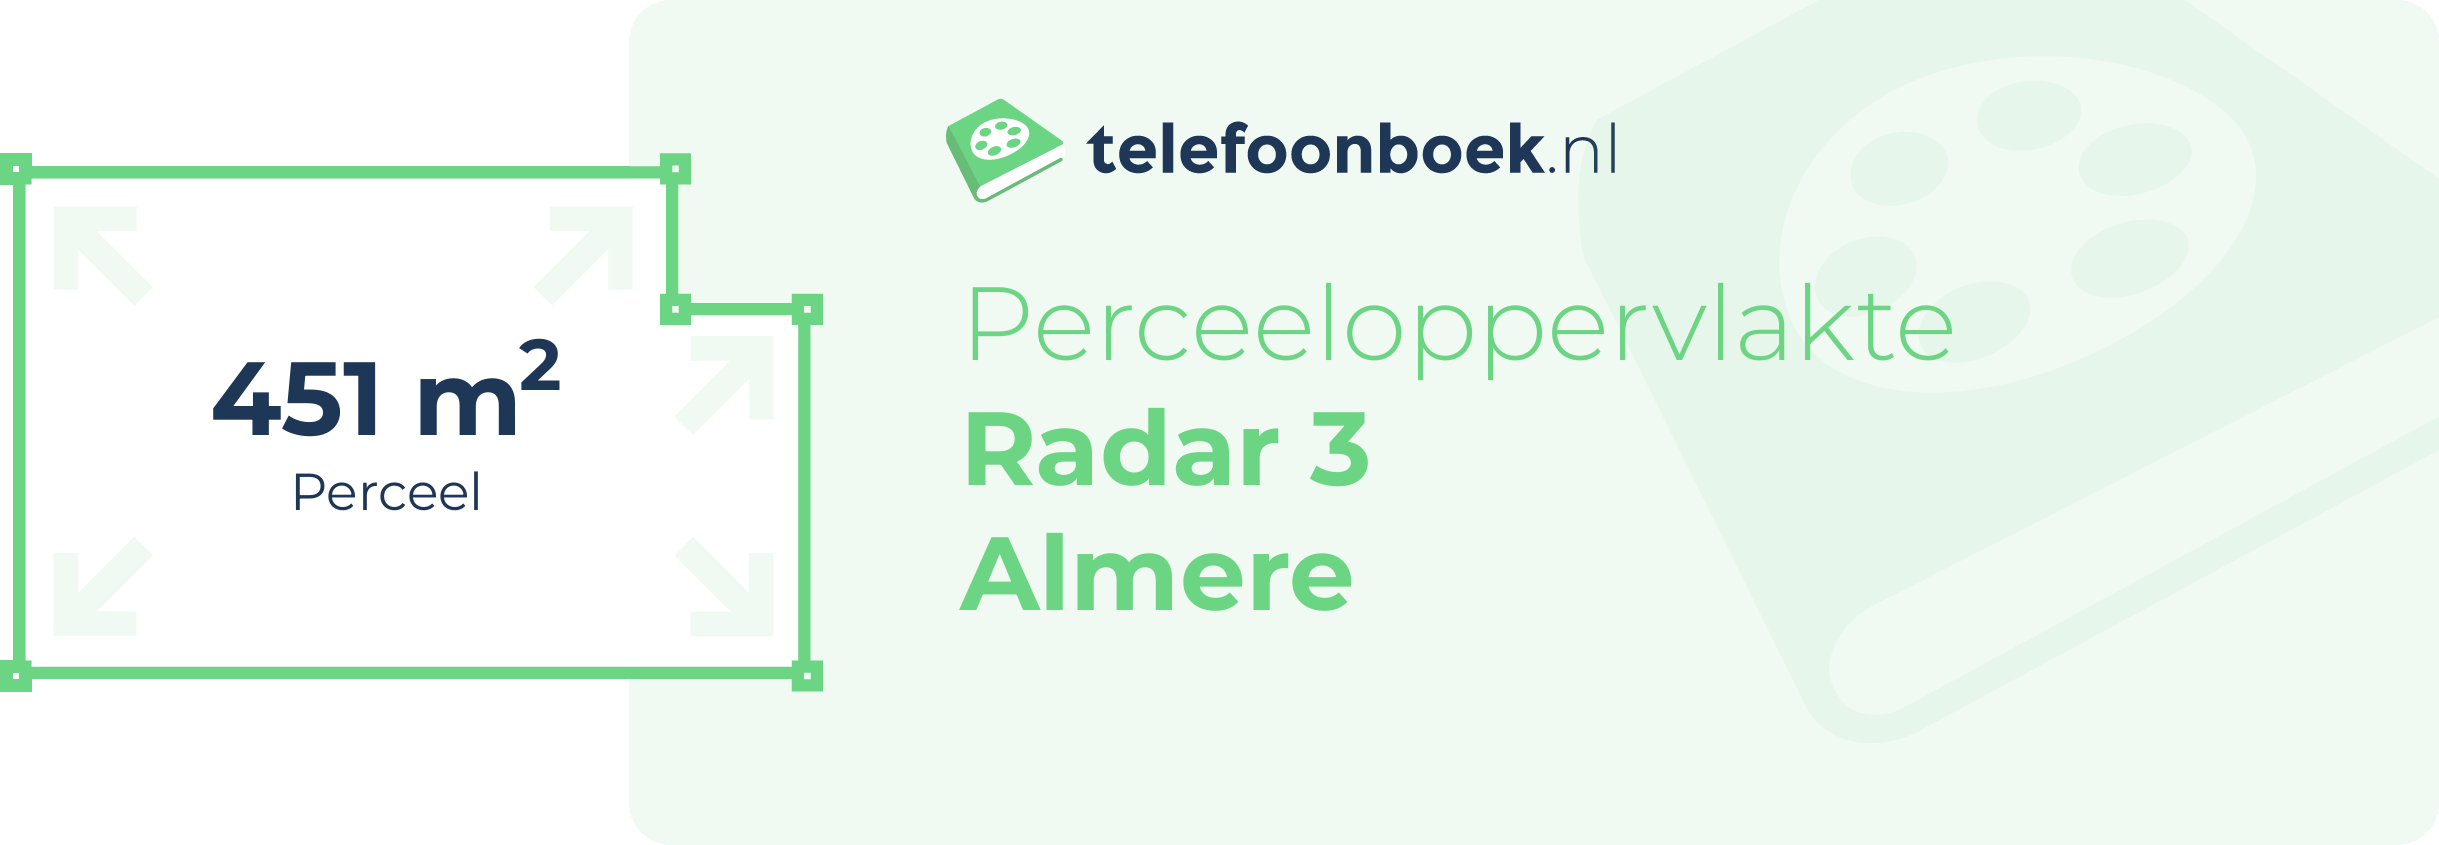 Perceeloppervlakte Radar 3 Almere